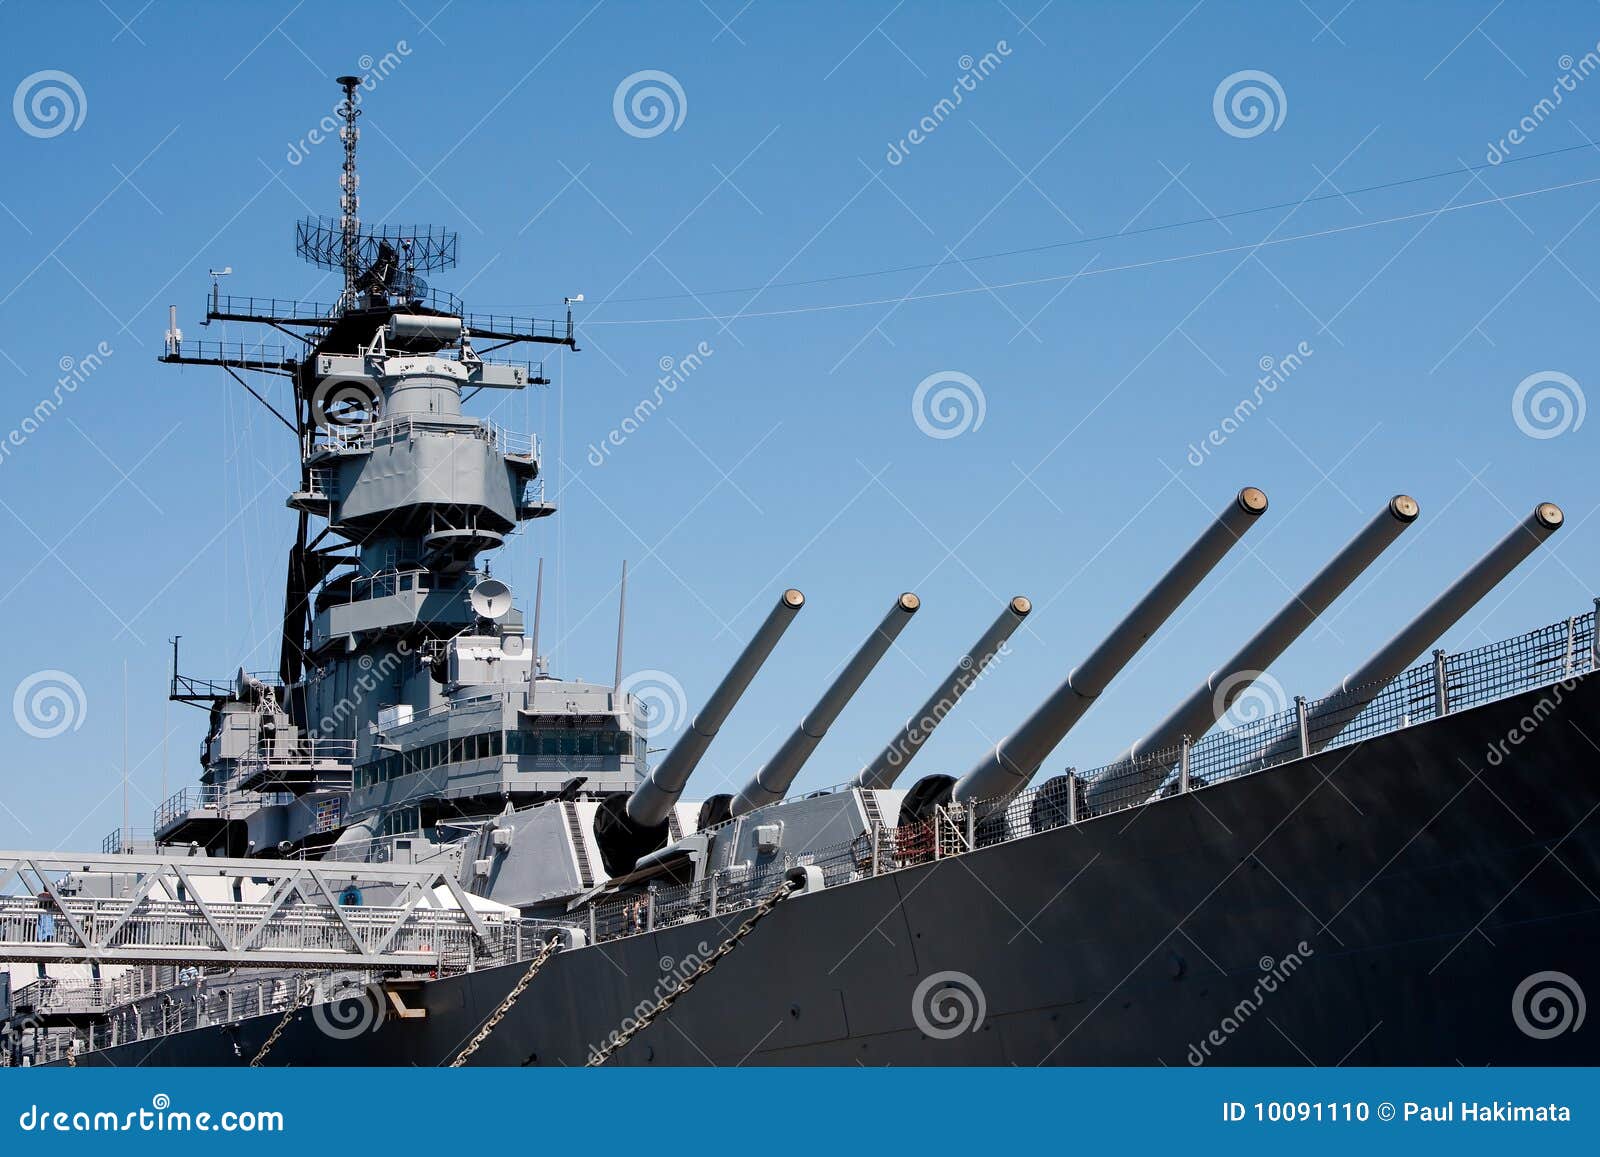 turrets on navy battle ship